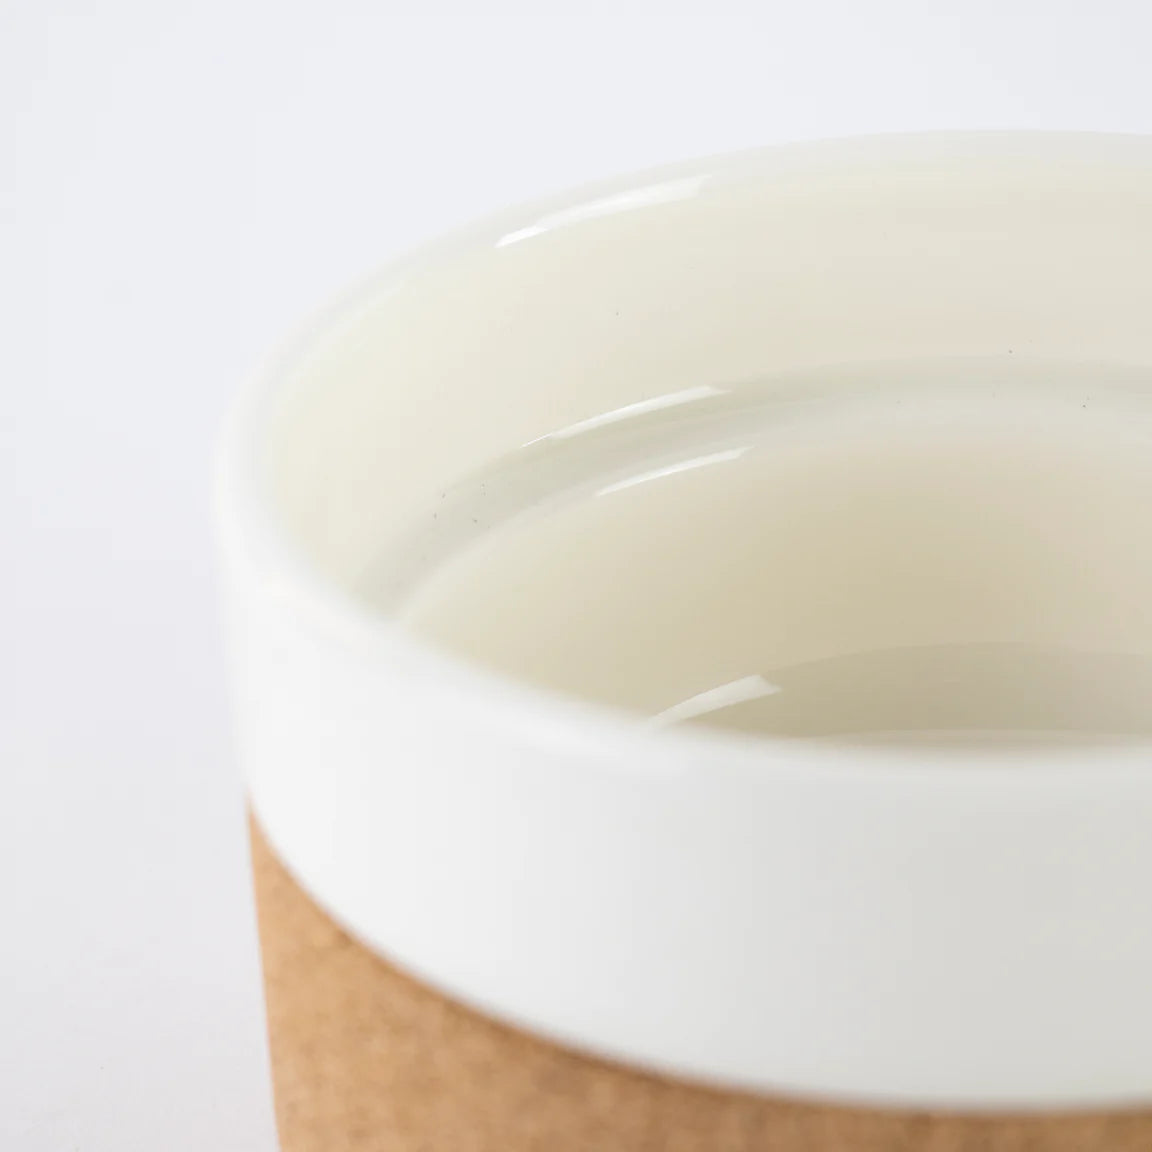 Eco Bowl in Cream by LIGA